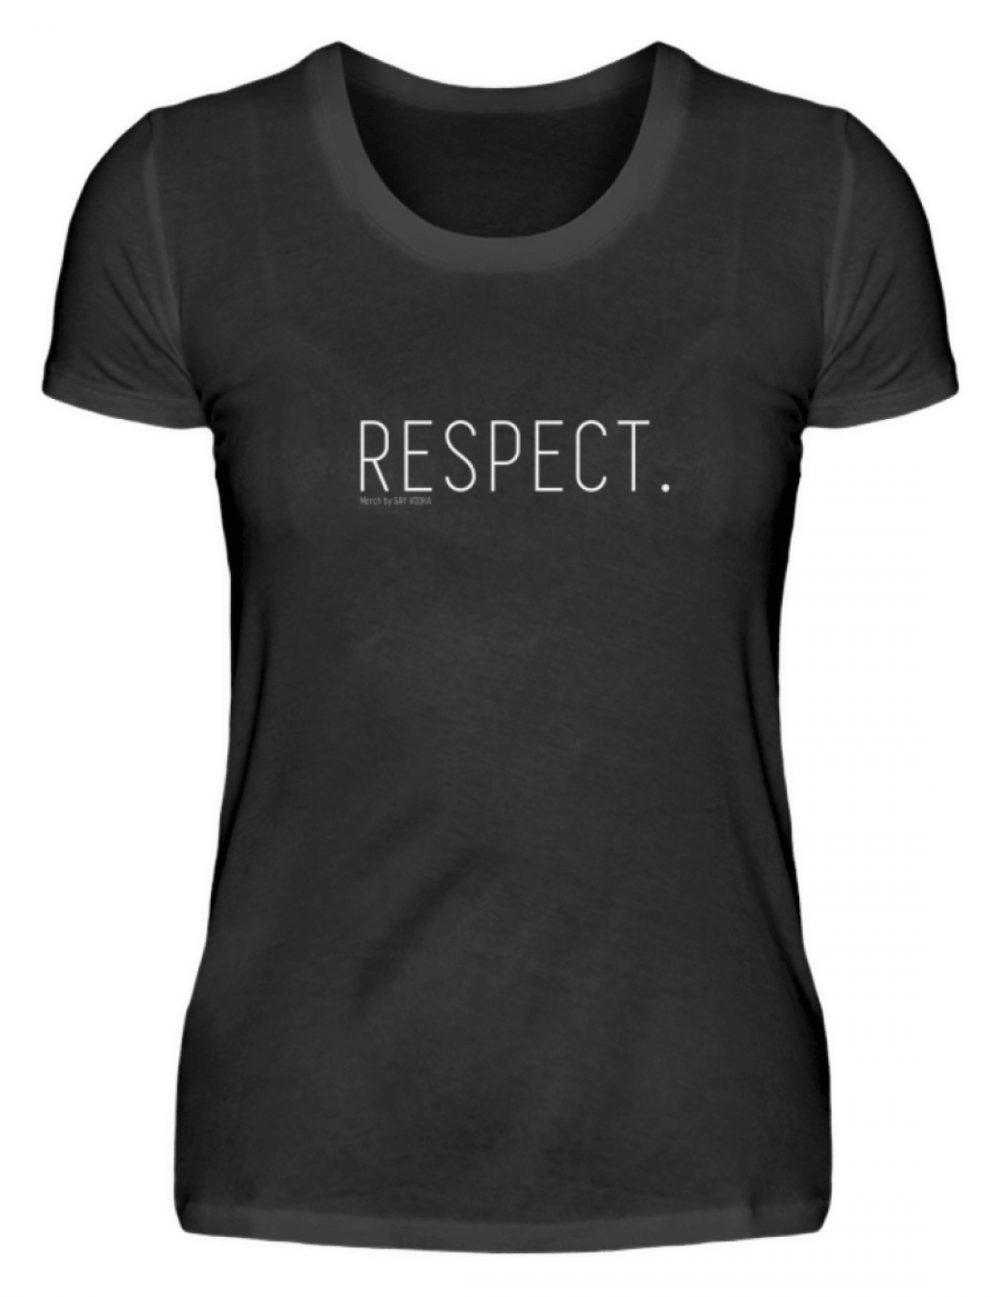 RESPECT. - Damen Premiumshirt-16